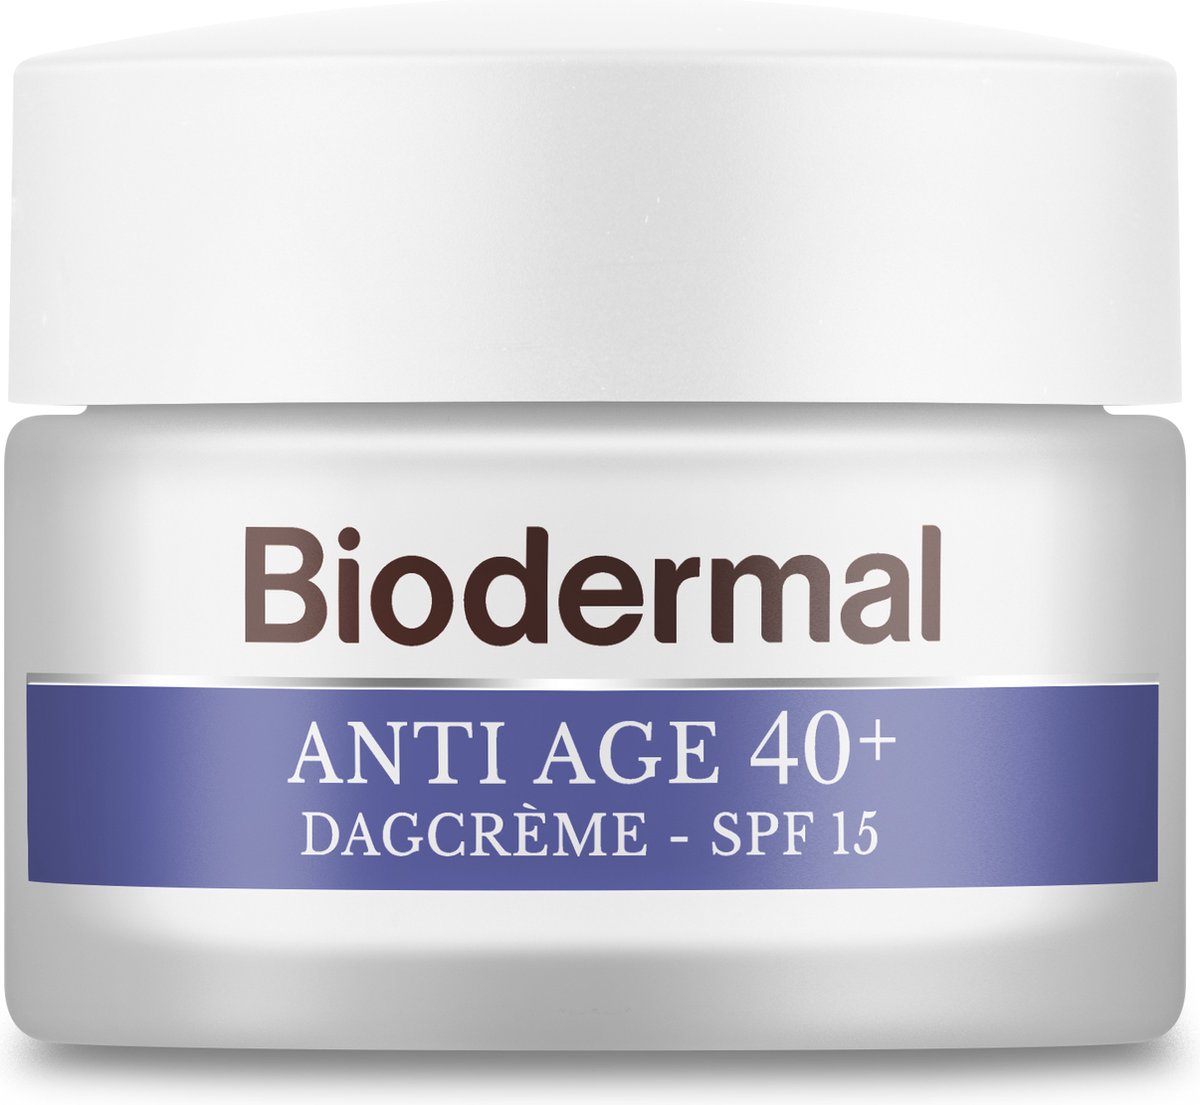 Biodermal Anti Age dagcrème 40+ - Dagcrème met hyaluronzuur en vitamine C - met SPF15 - anti rimpel creme vrouwen - 50ml - Biodermal